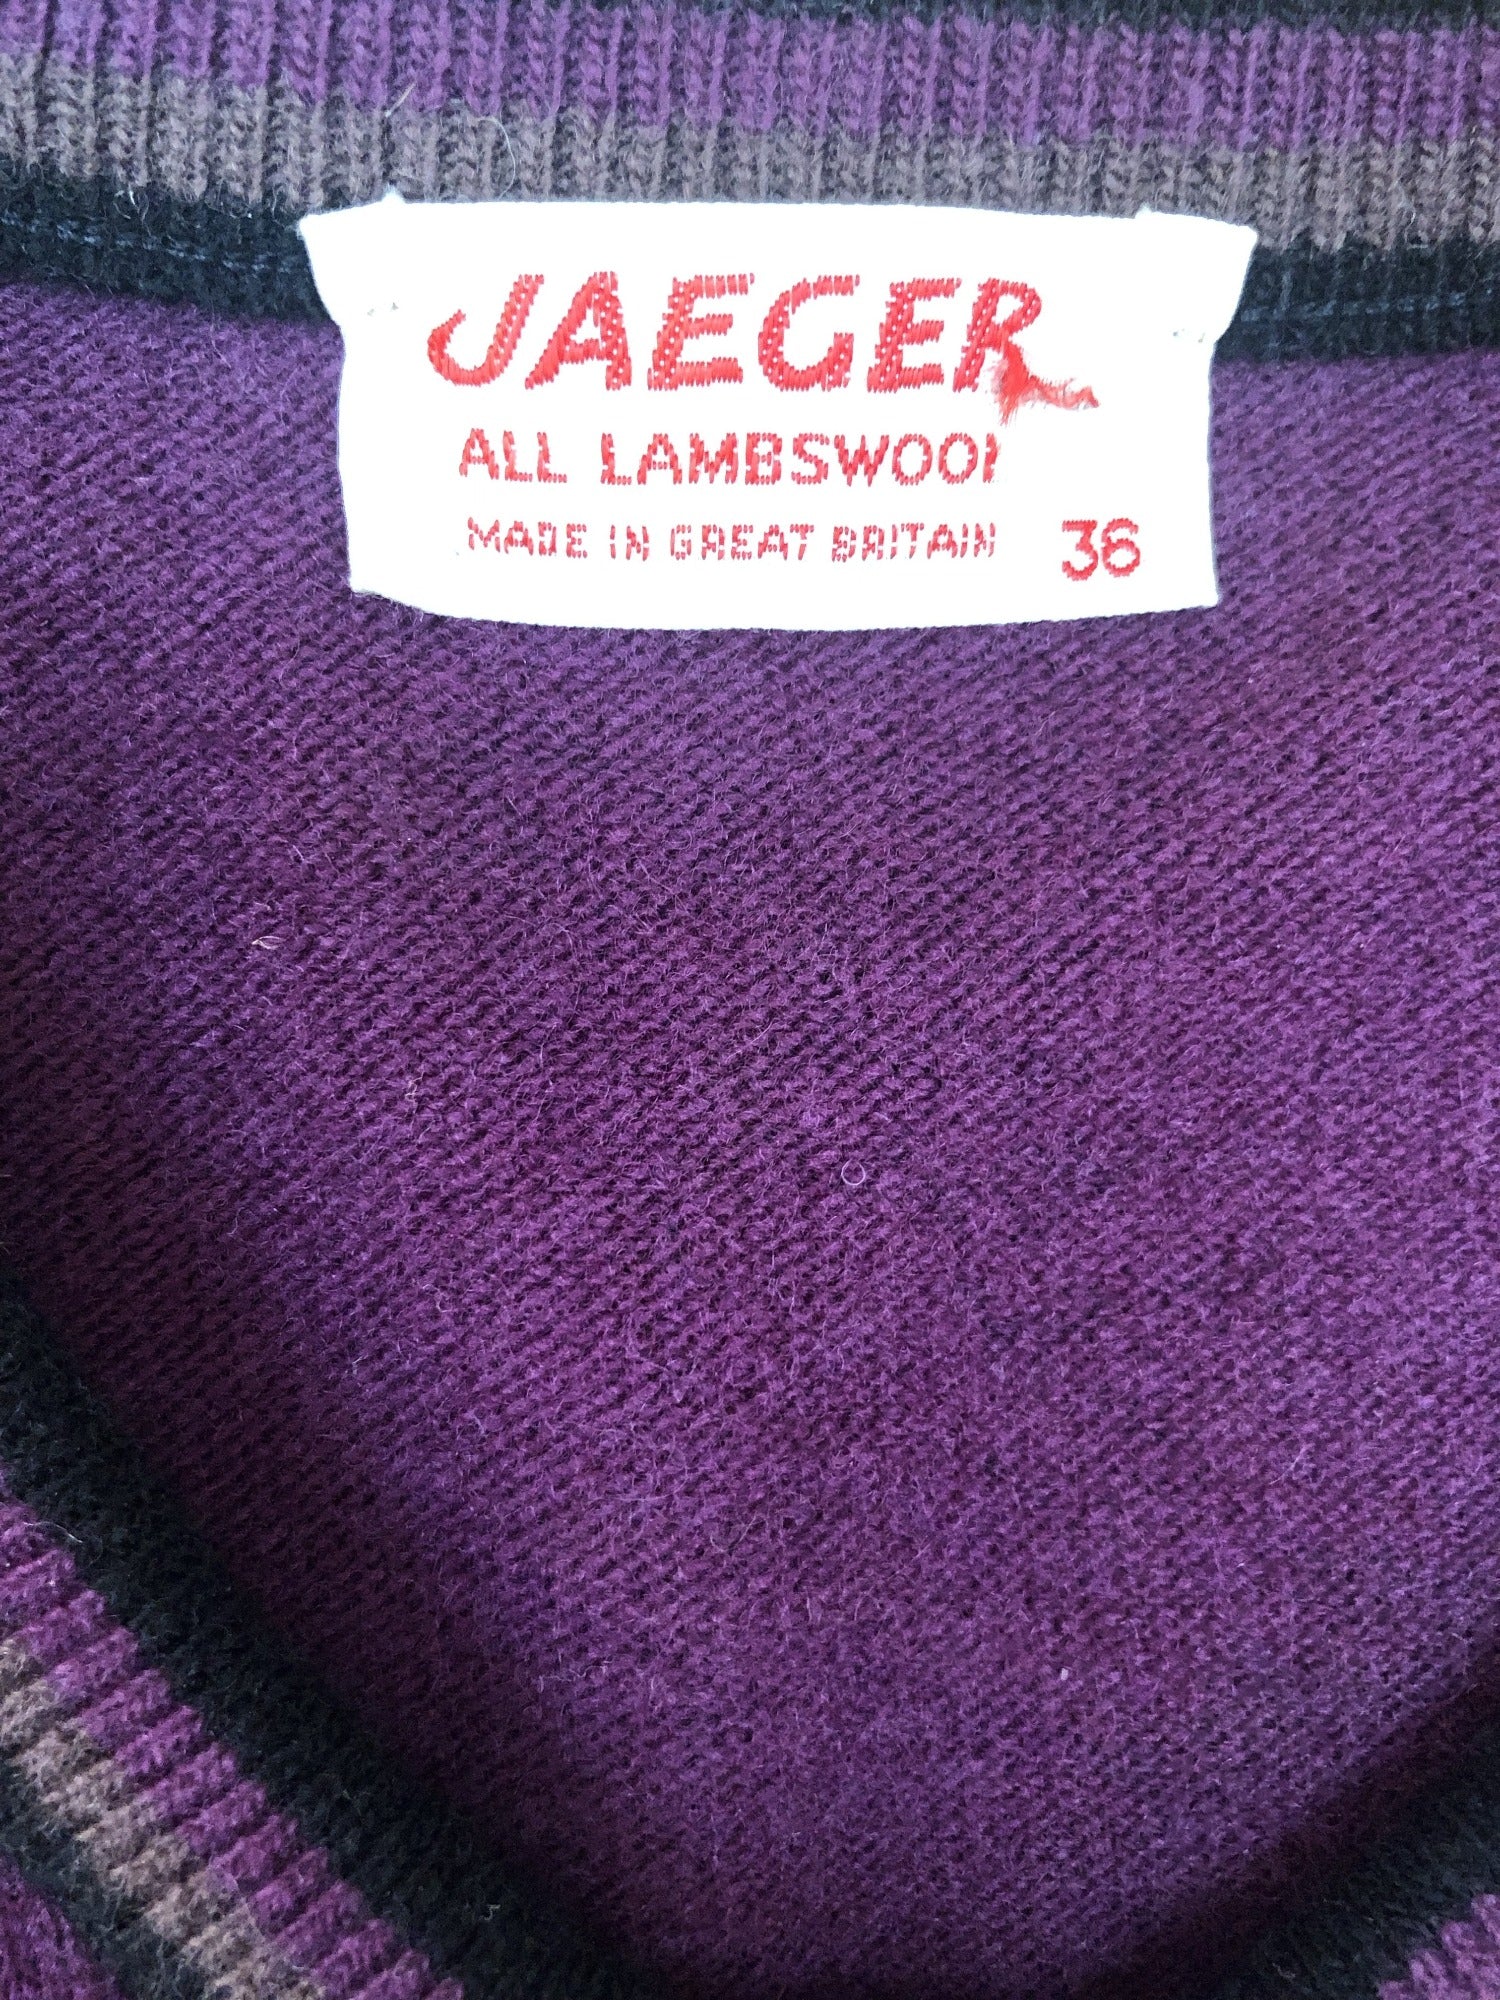 Workwear  womens  vest  Urban Village Vintage  Tank Top  tank  sweater  Stripes  purple  jaeger  cardigan  70s  1970s  12